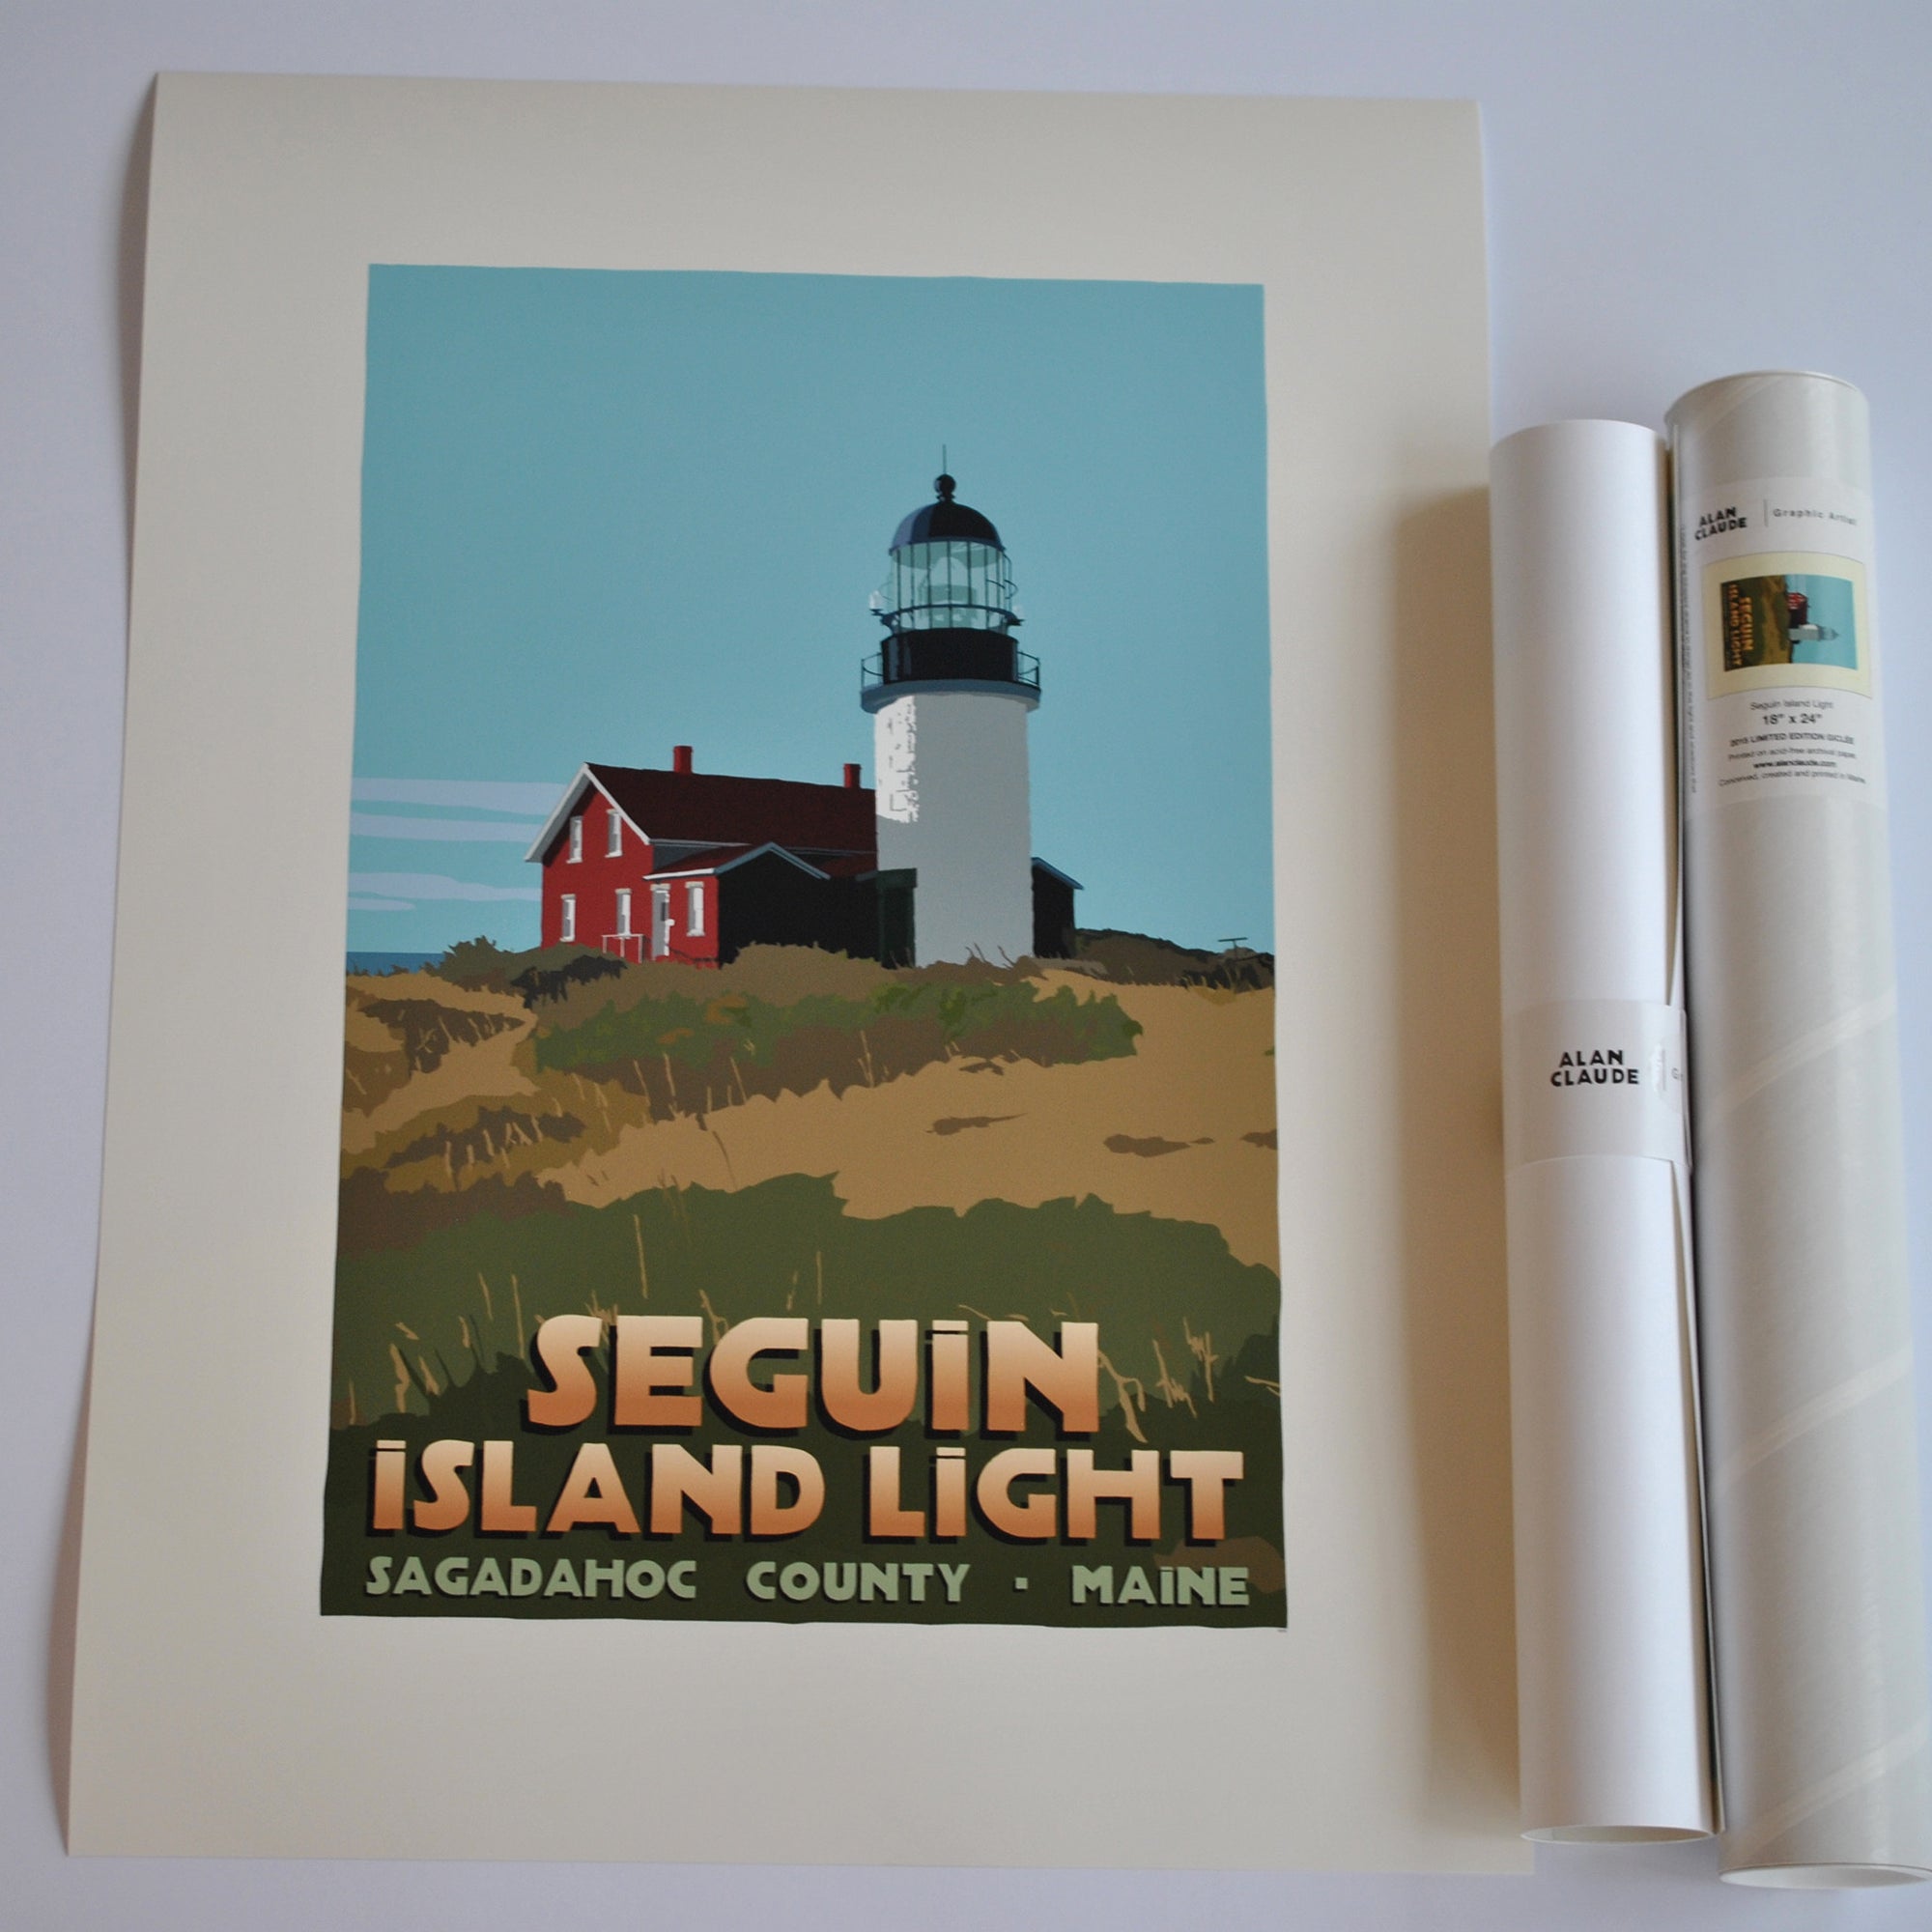 Seguin Island Light Art Print 18" x 24" Travel Poster By Alan Claude - Maine